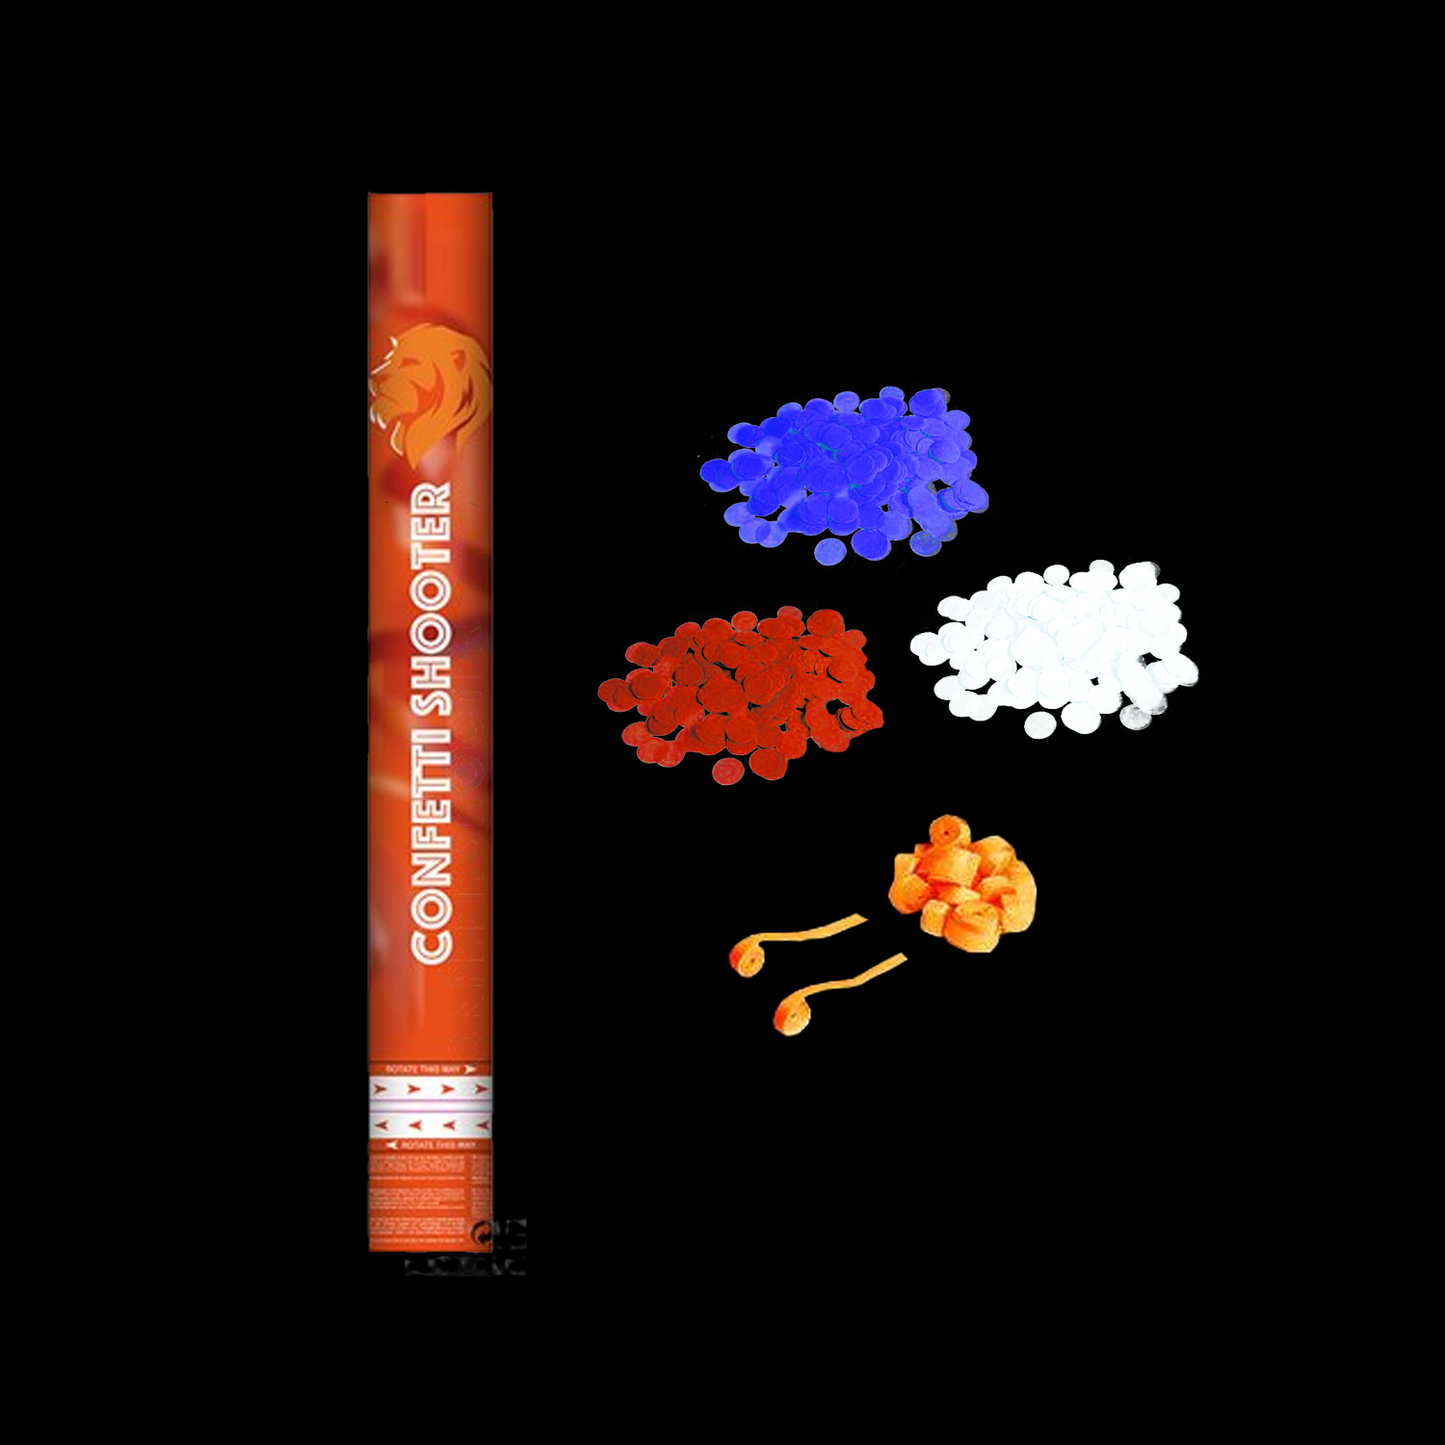 Confetti kanon - 40cm - Rood/wit/blauw met oranje swirls